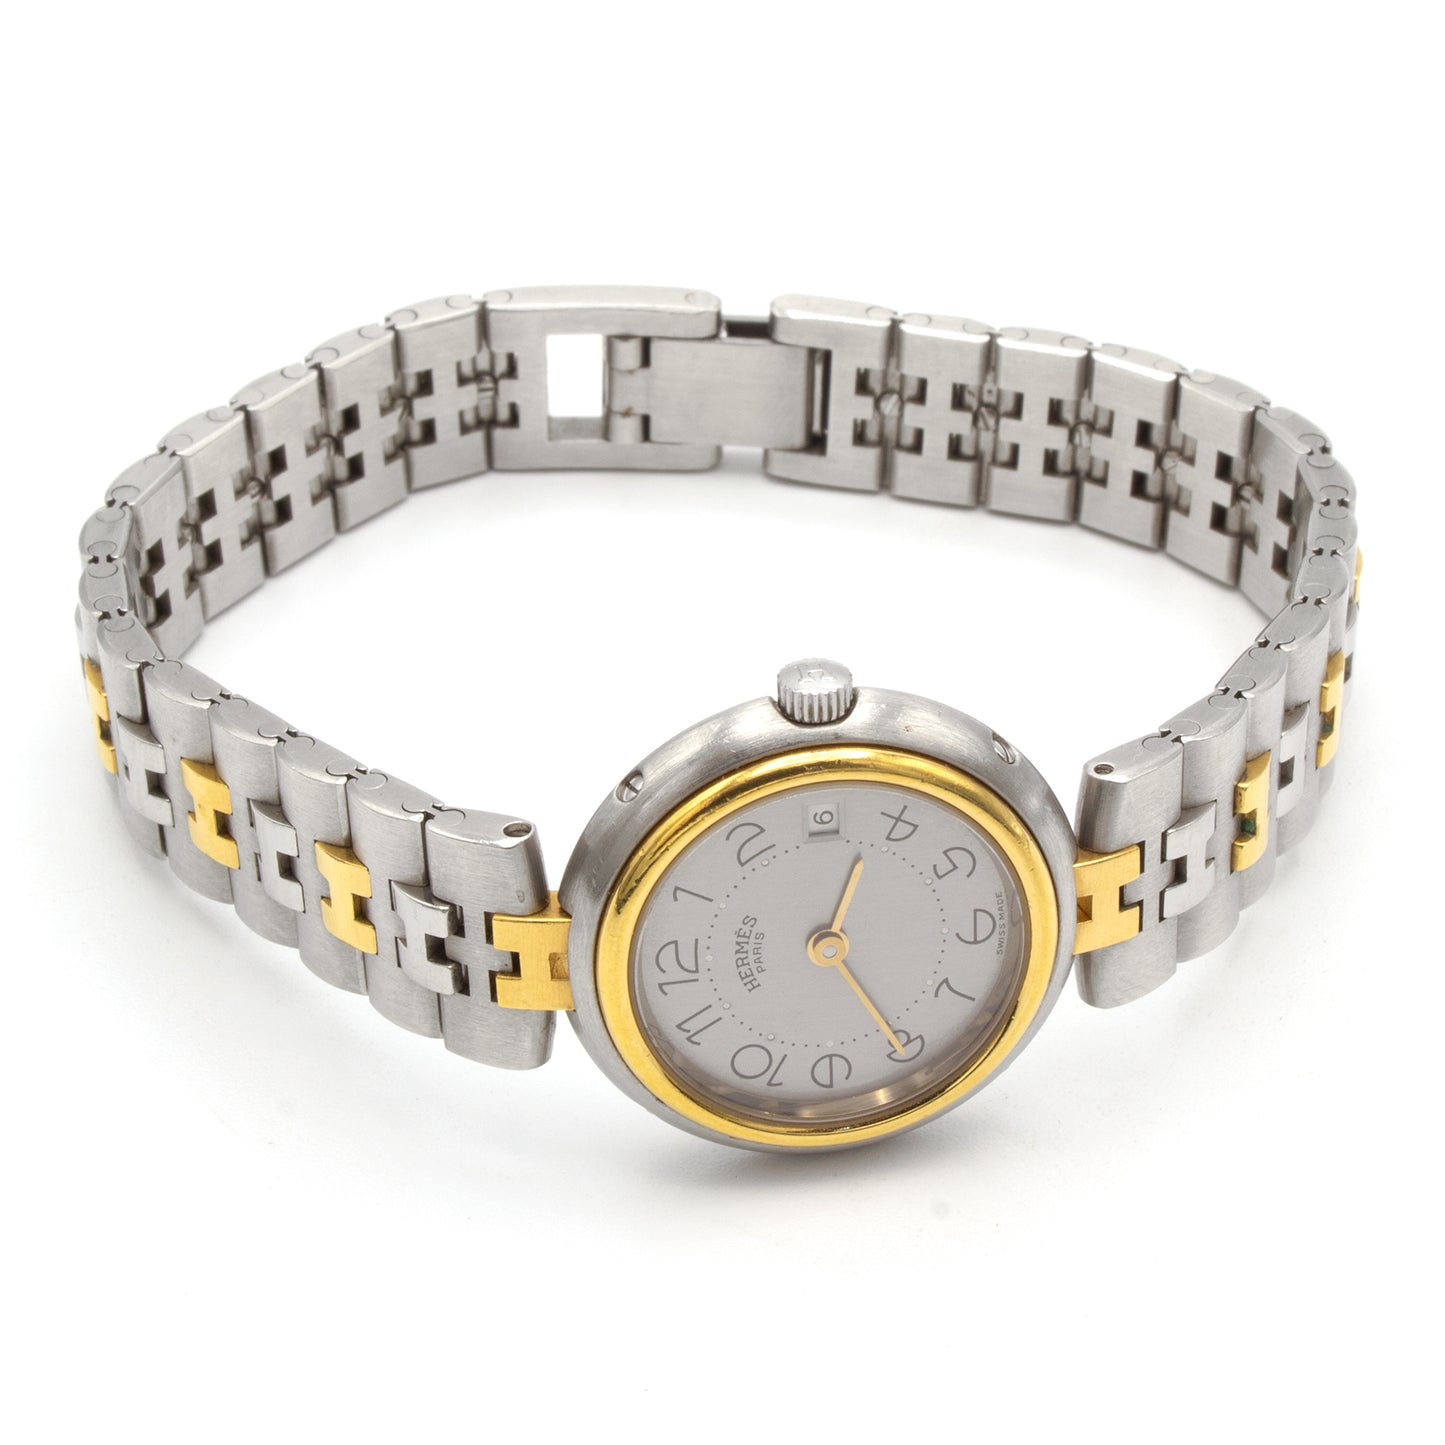 Hermès Profile 25mm watch